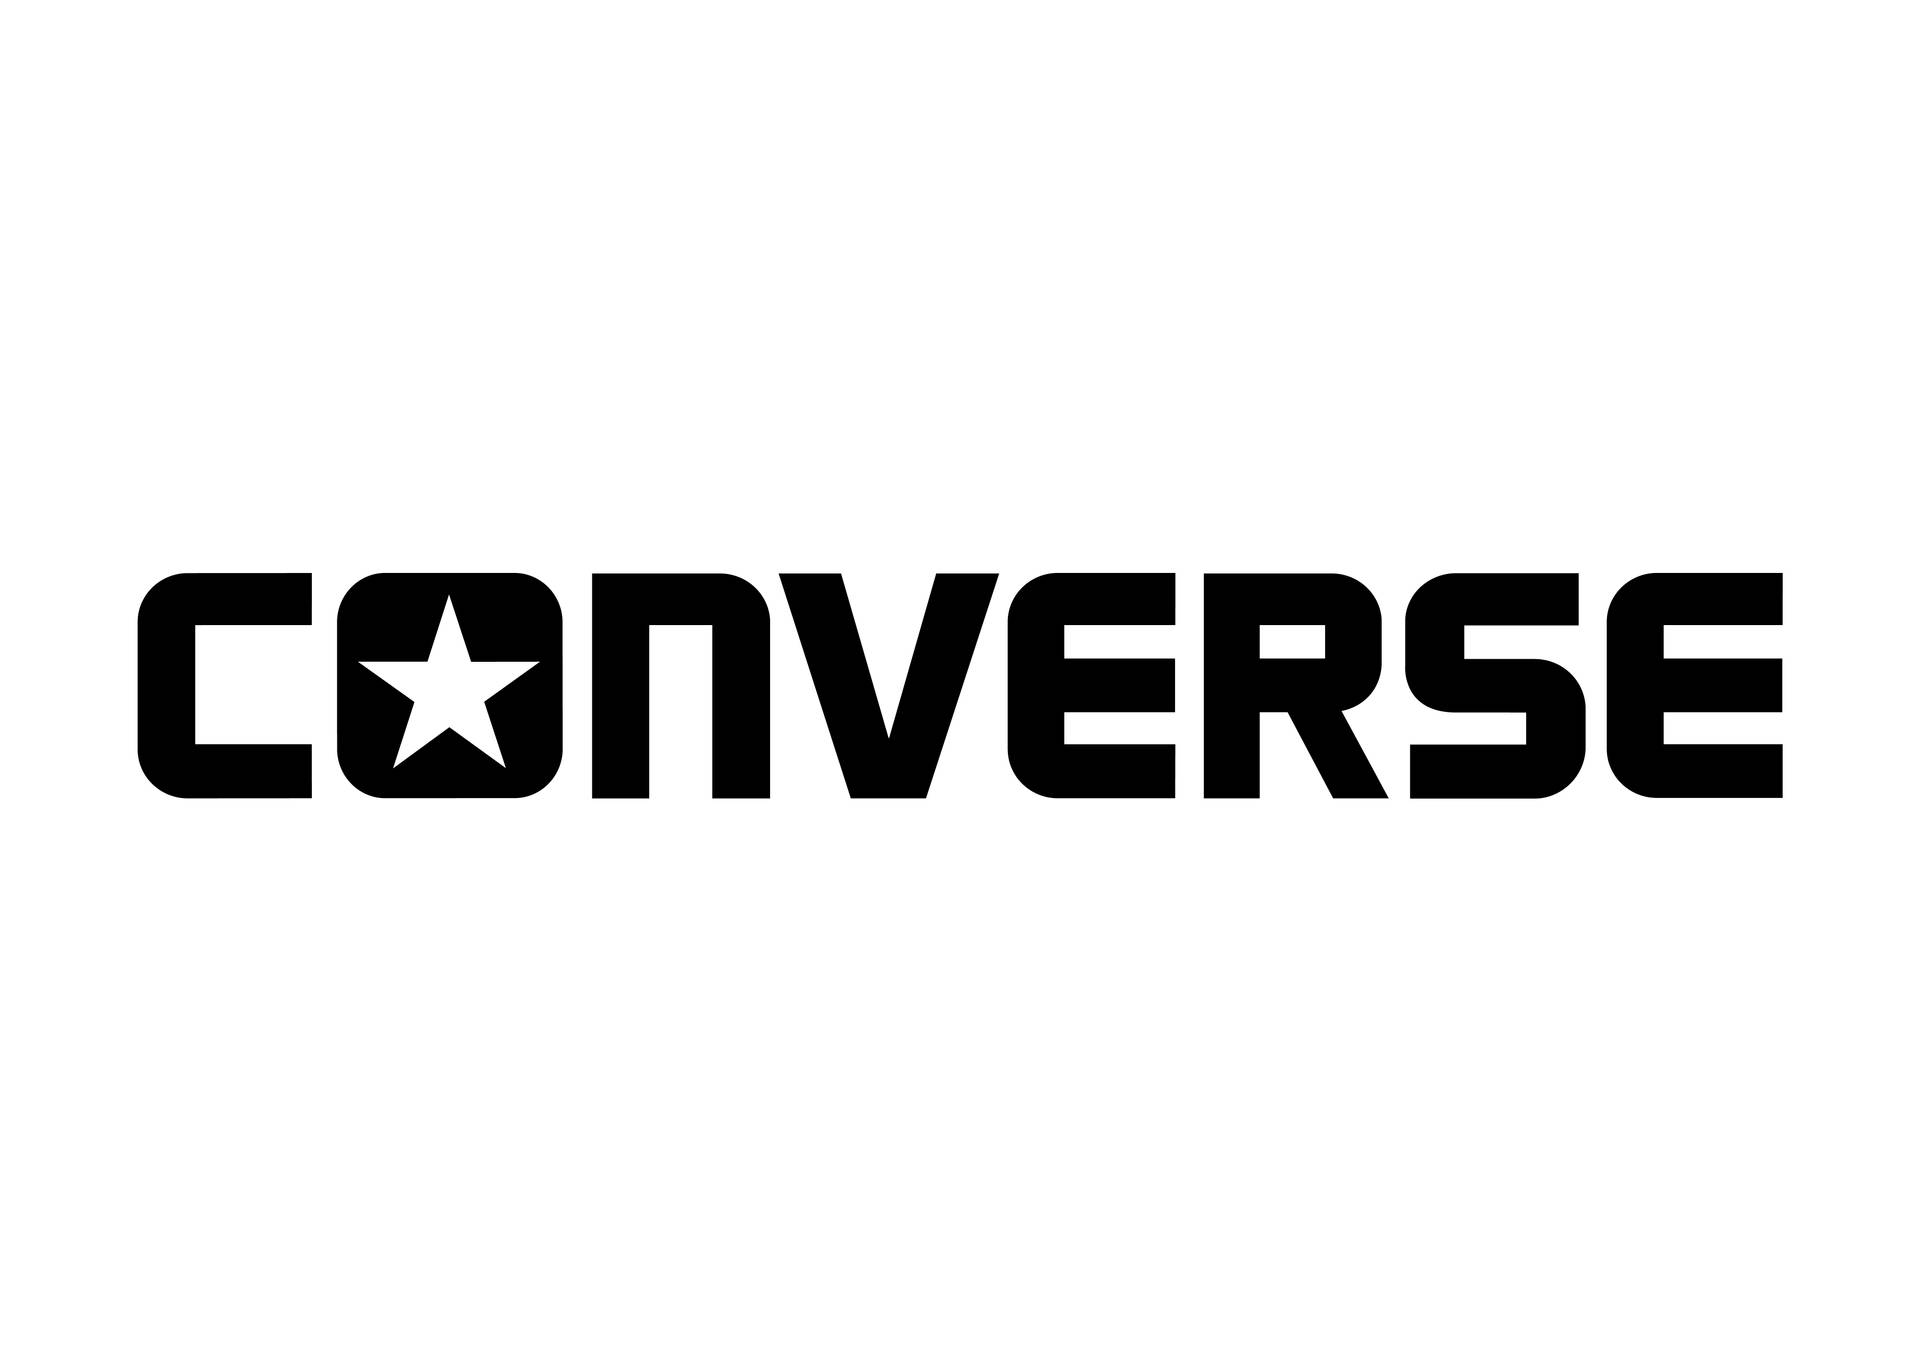 2011 Black Converse Logo